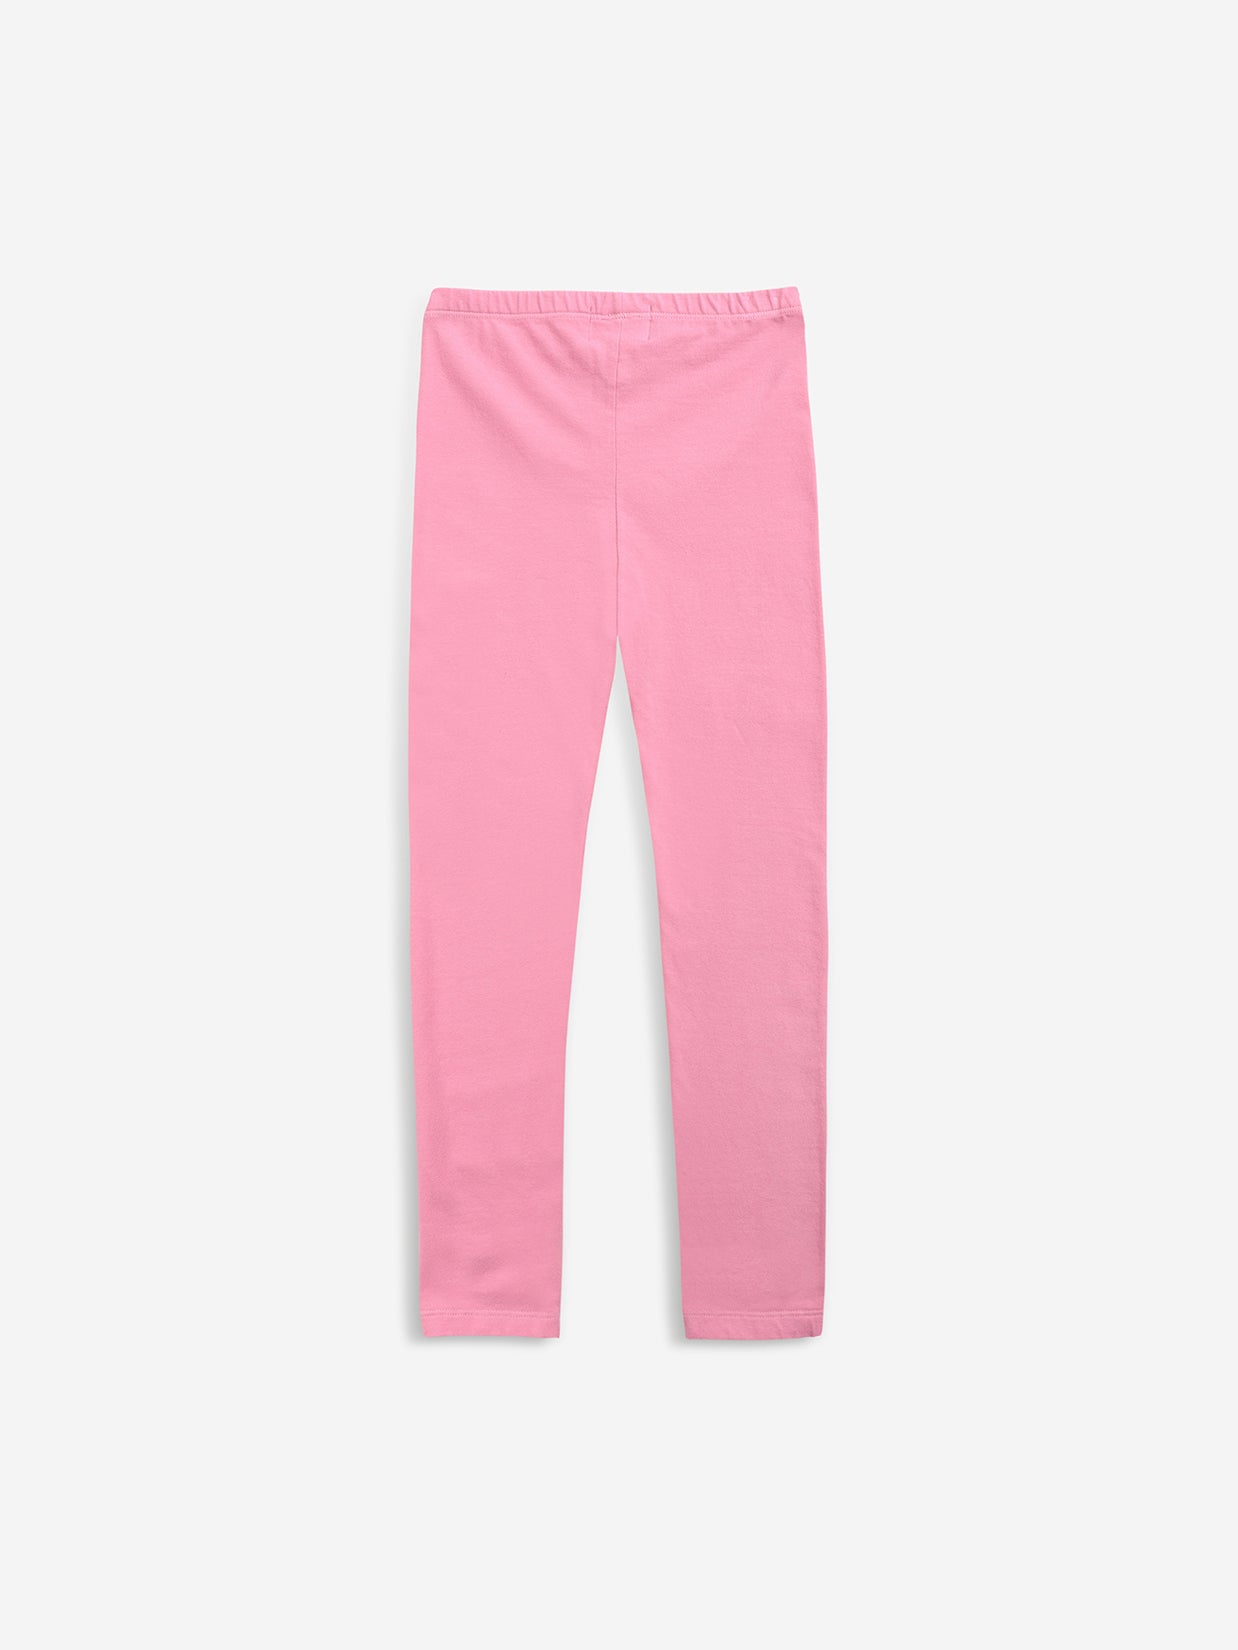 Bobo Choses pink leggings